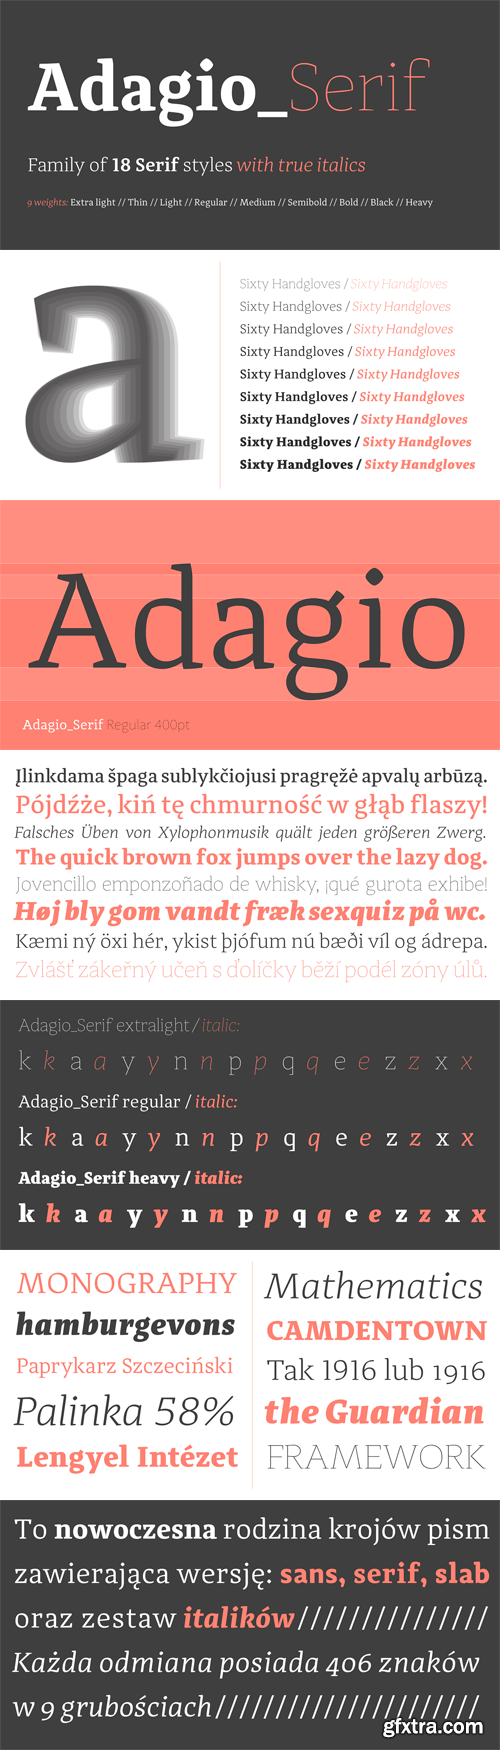 Adagio Serif Font Family - 18 Fonts for $270